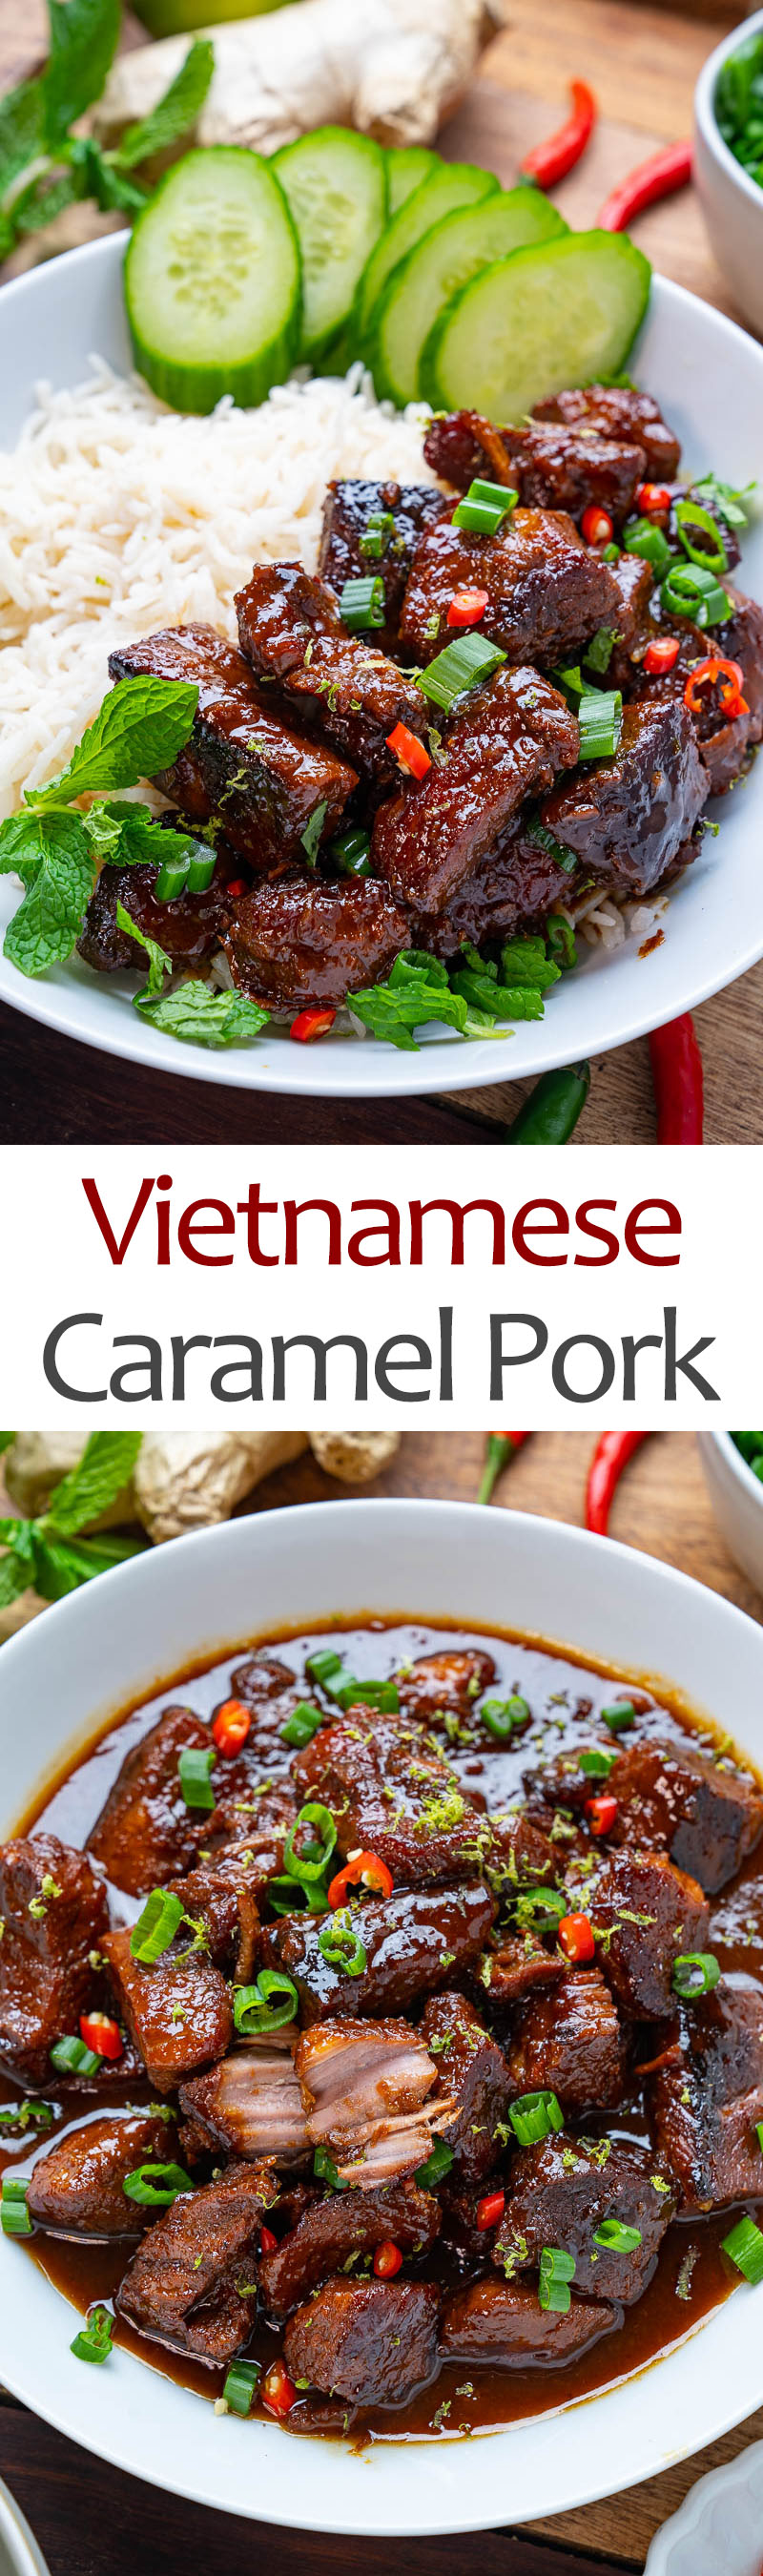 Vietnamese Caramel Pork